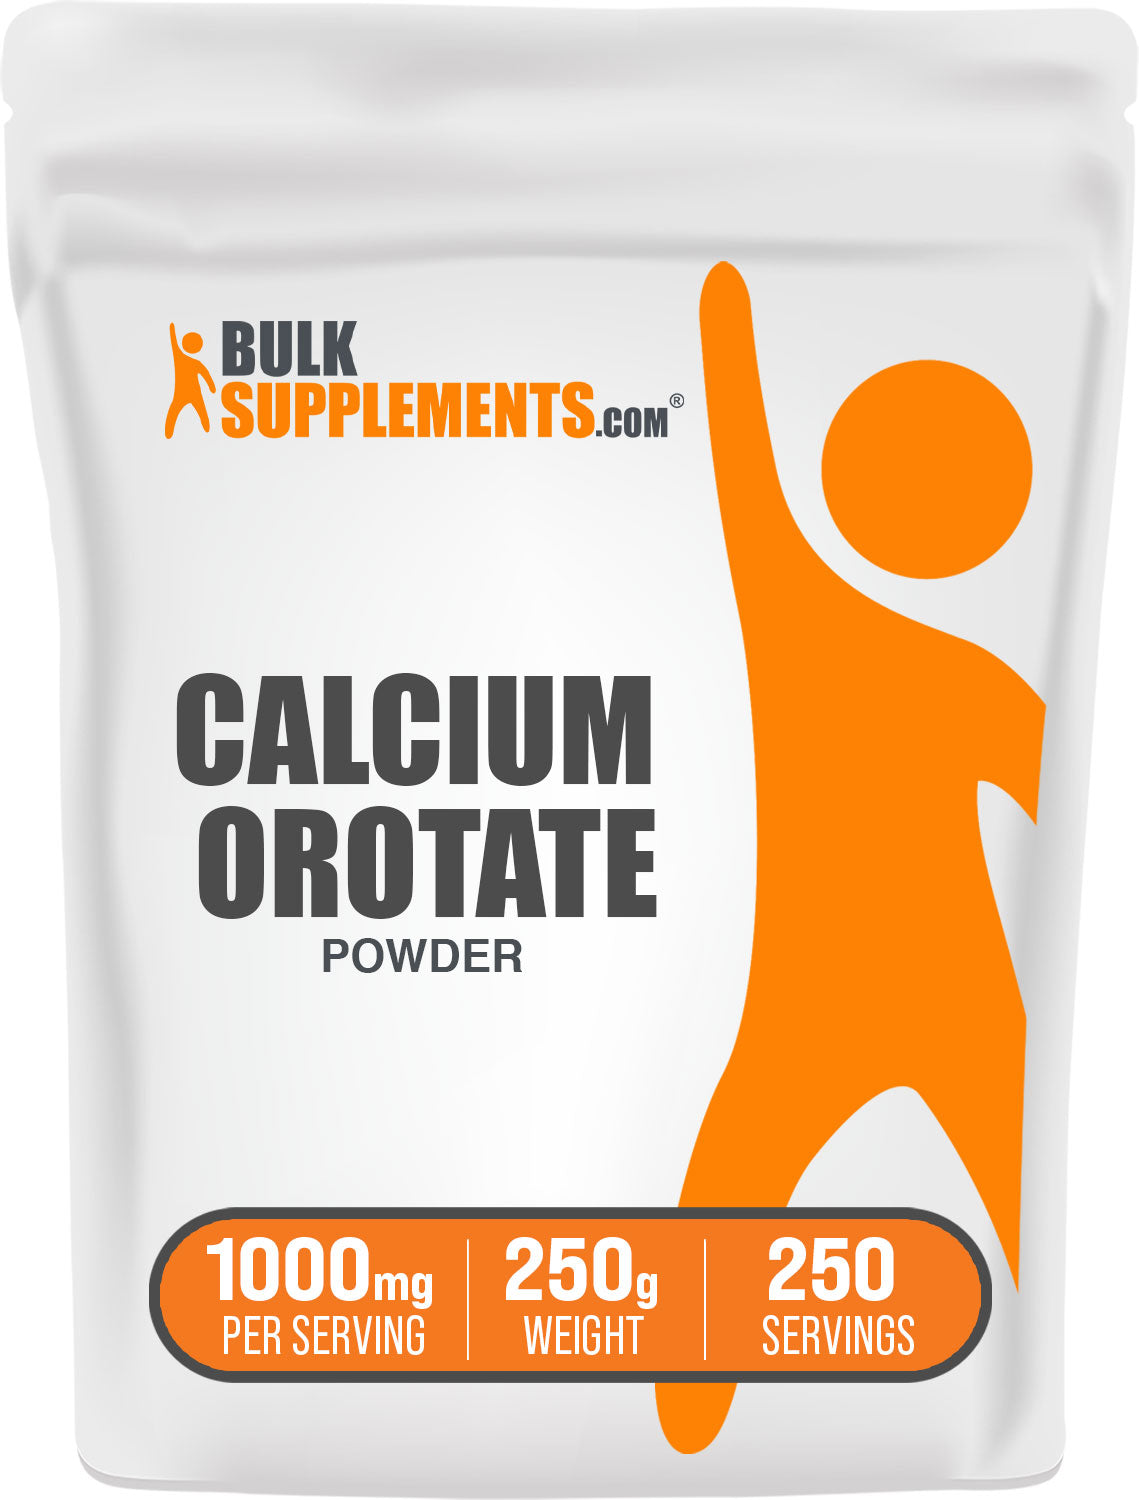 BulkSupplements.com Calcium Orotate Powder 250g Bag